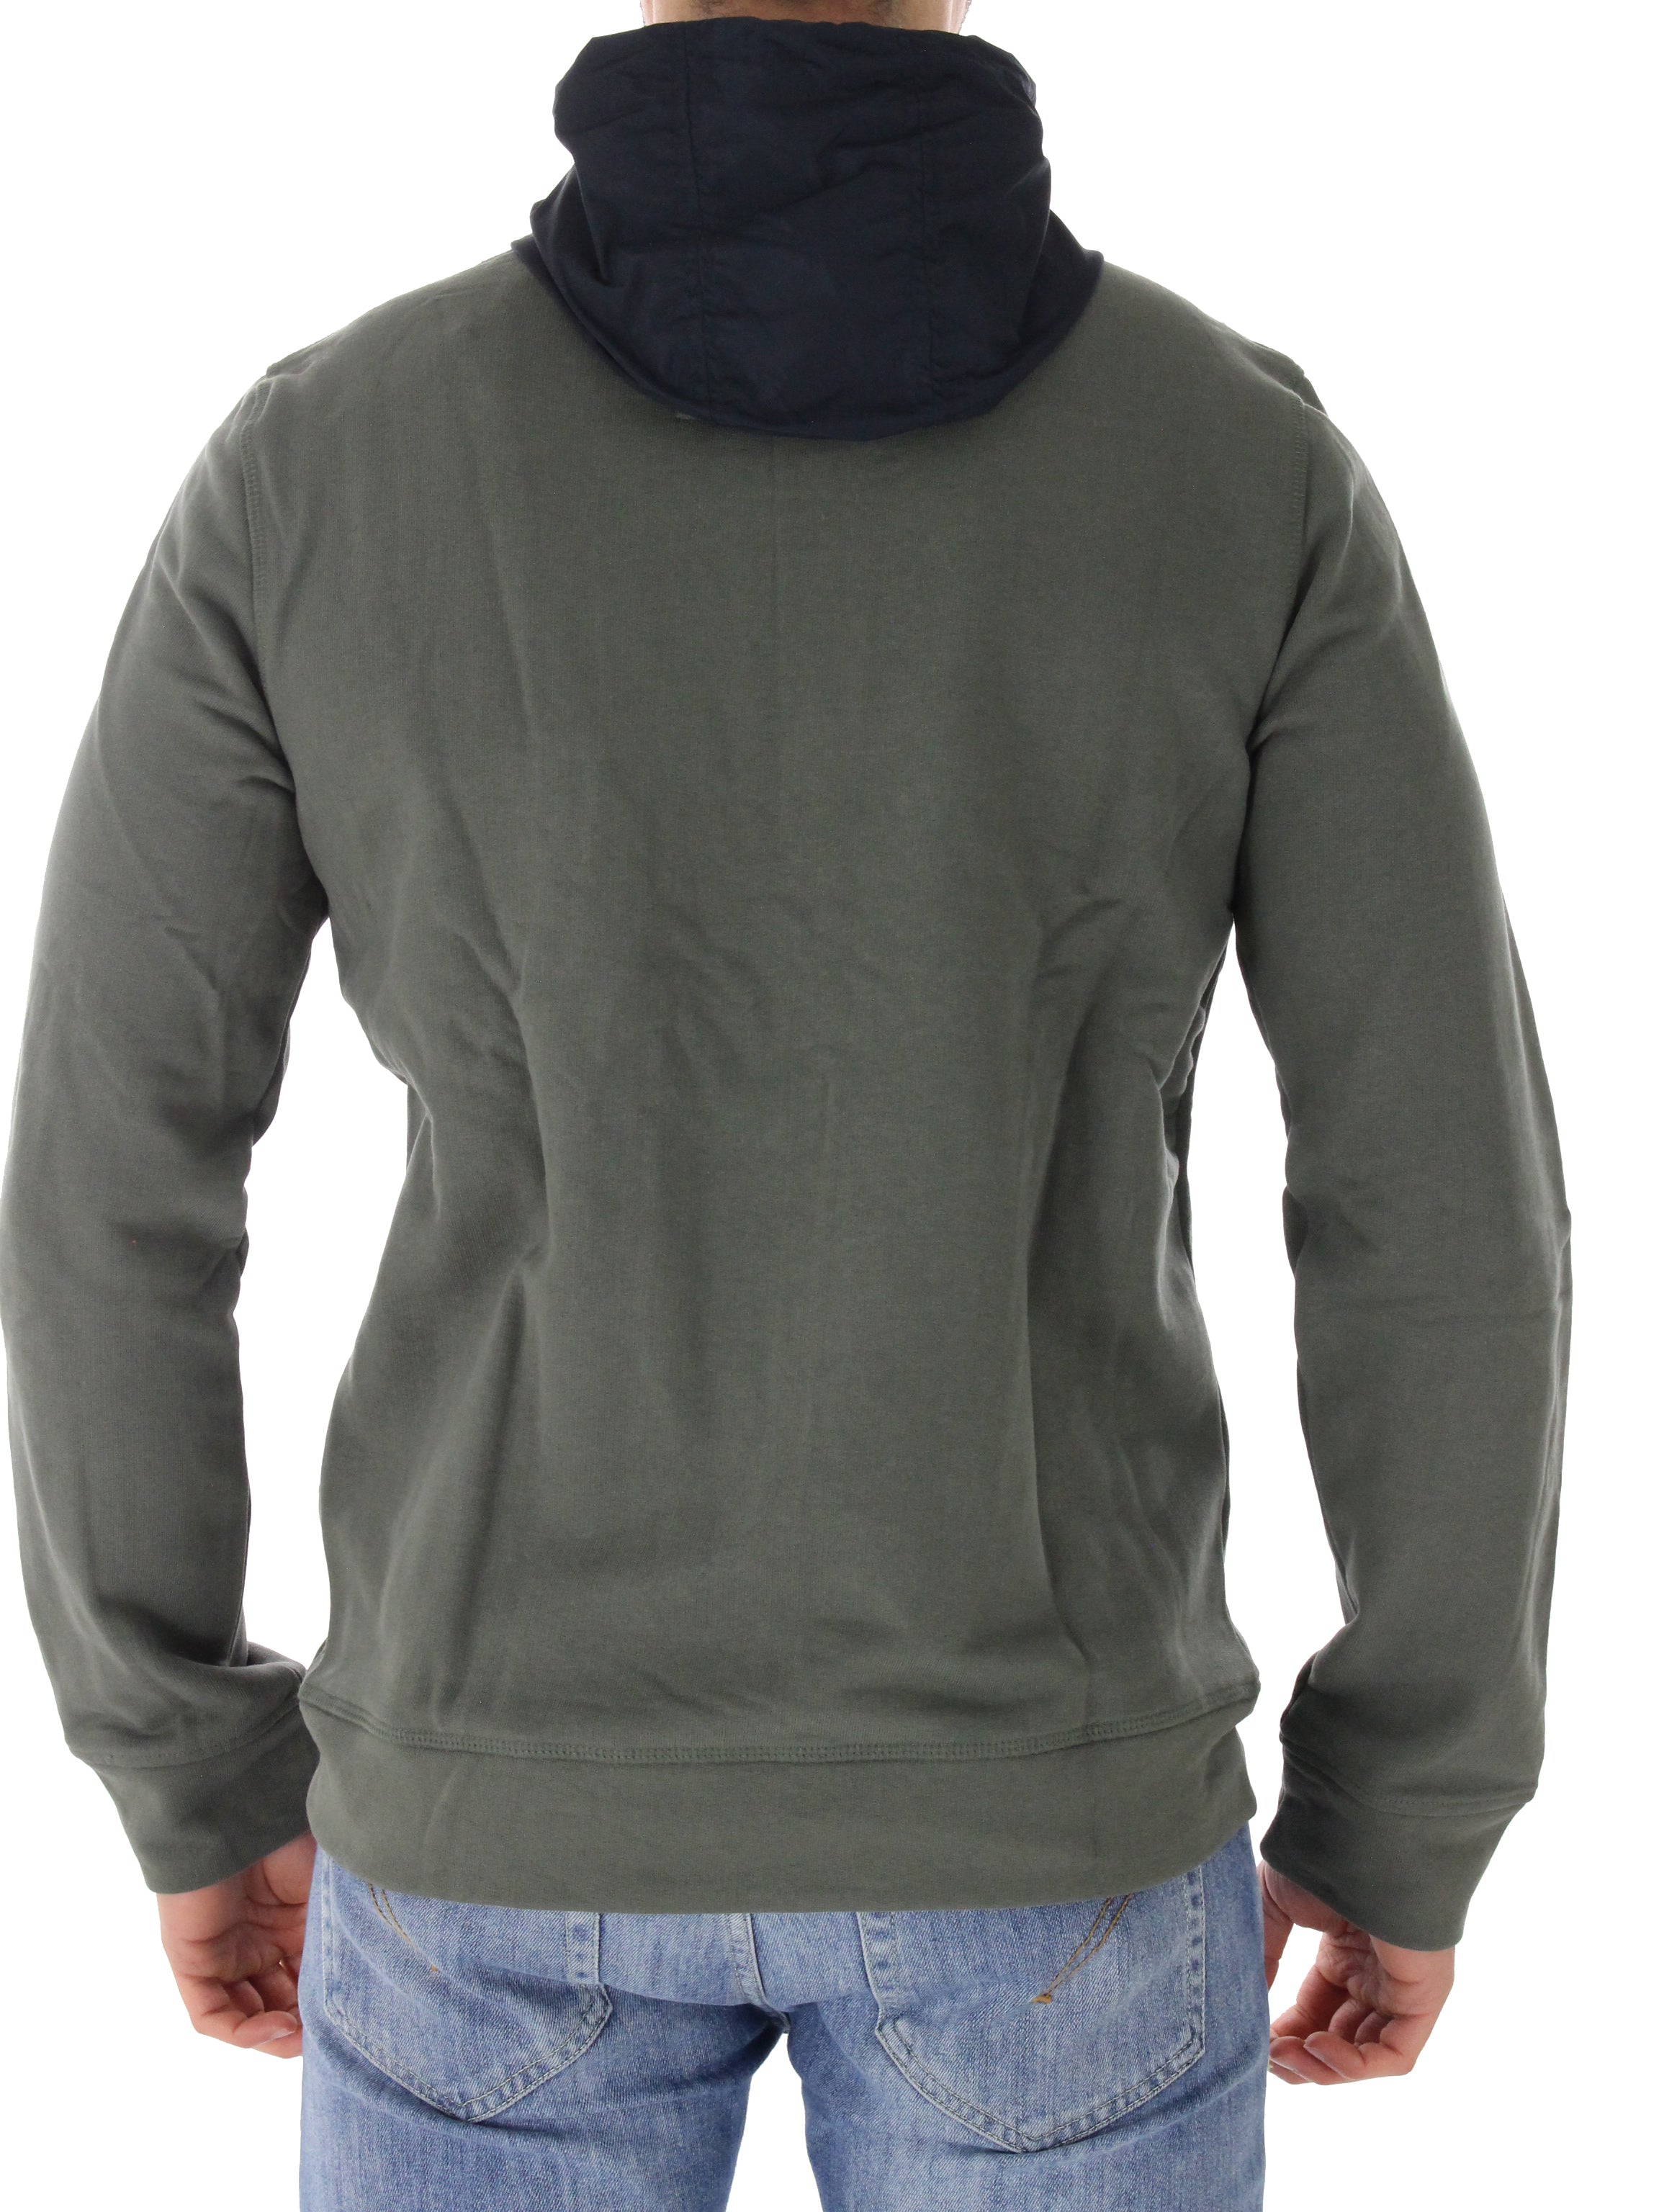 Green Sazbialf hooded zip sweatshirt